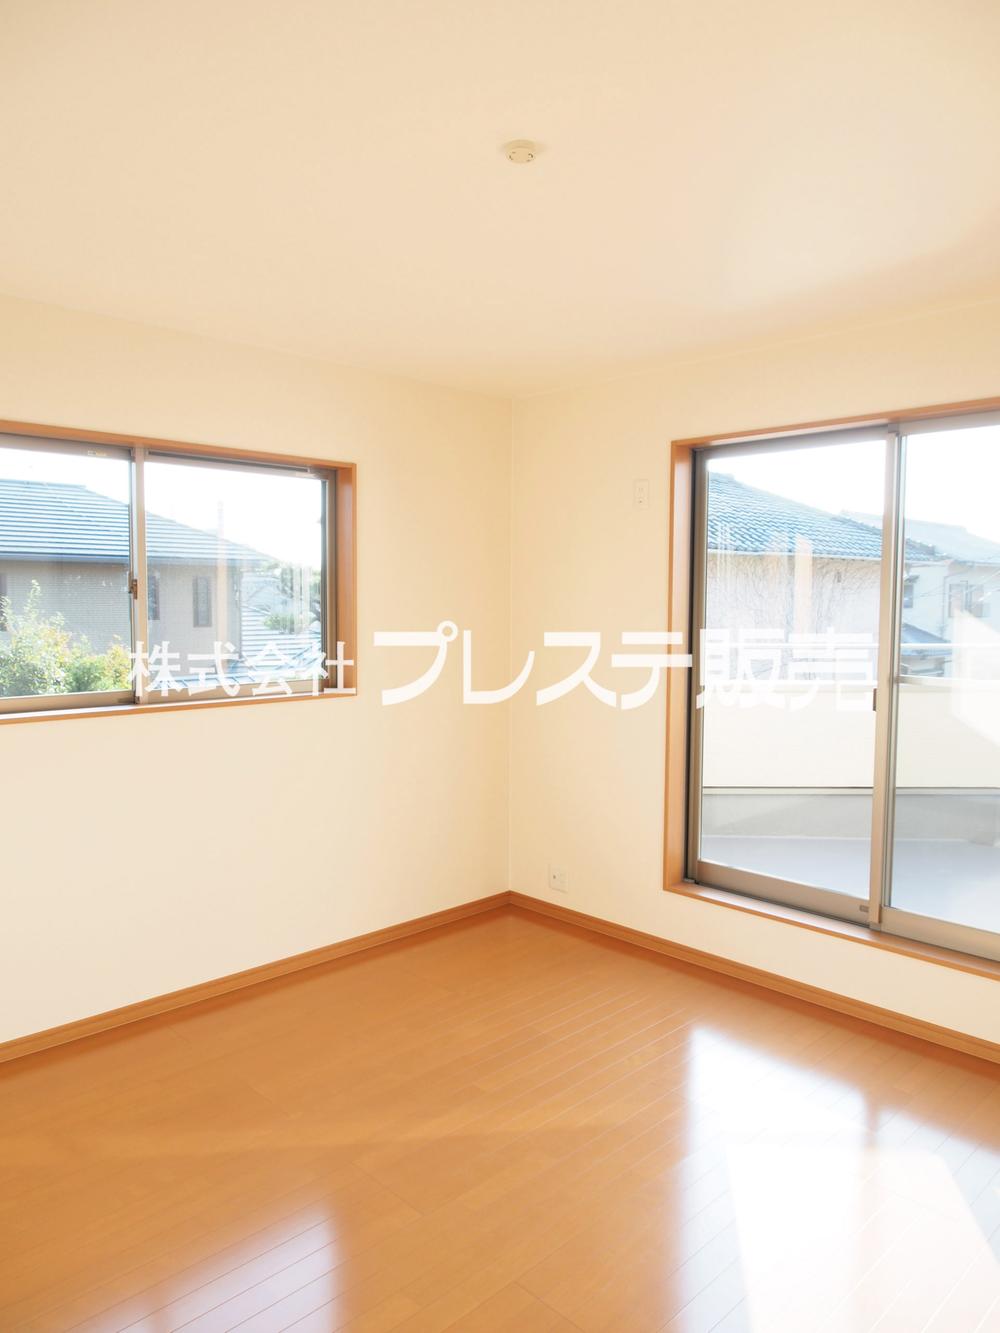 Non-living room. Local photo (No. 1 place 2 Kaikyoshitsu)